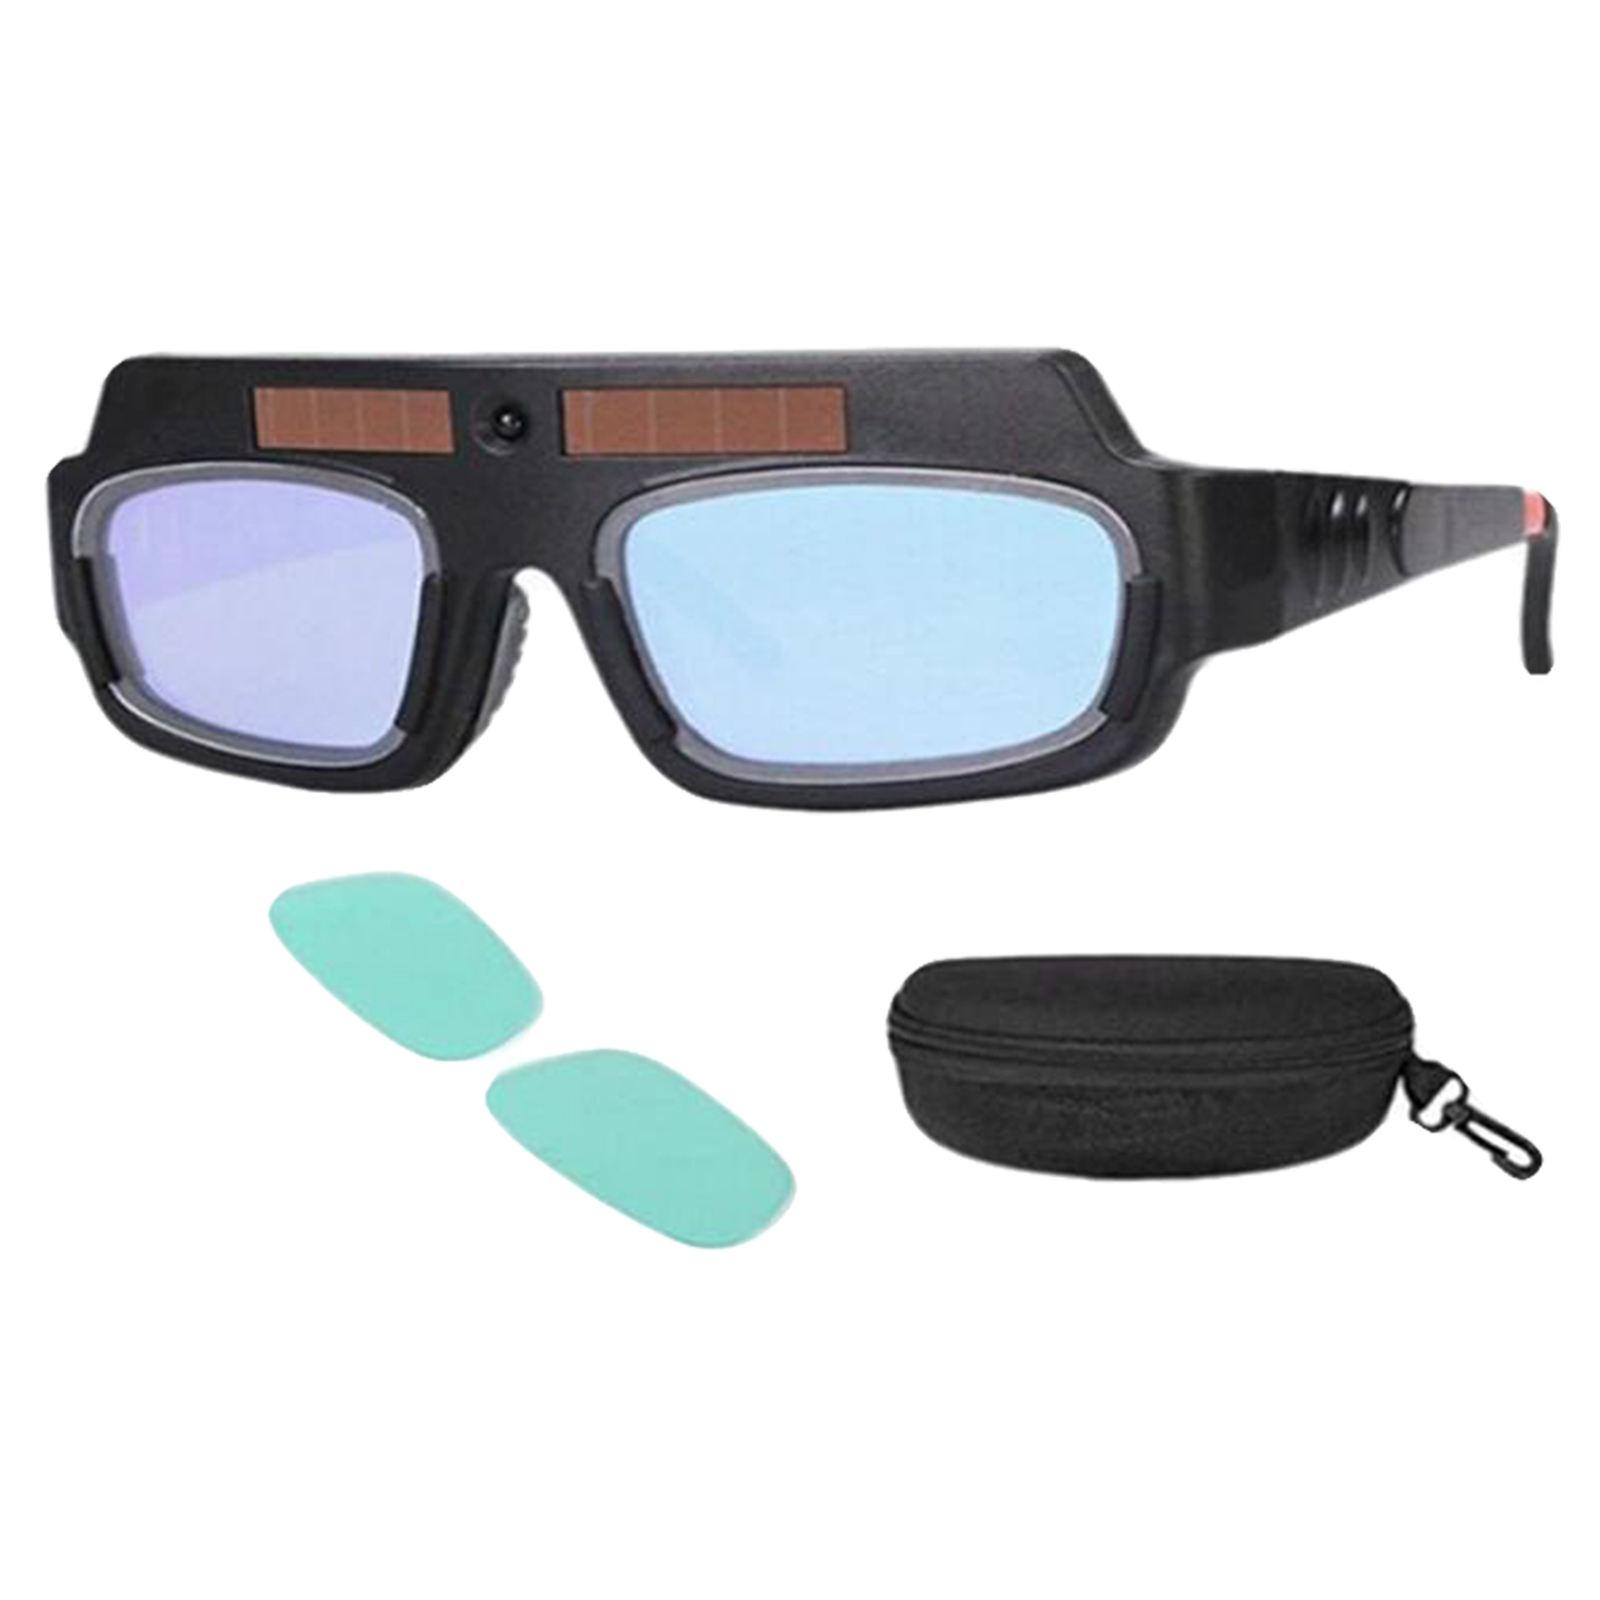 Auto Darkening Welding Goggles Eye Protection Solar Powered Welder Glasses